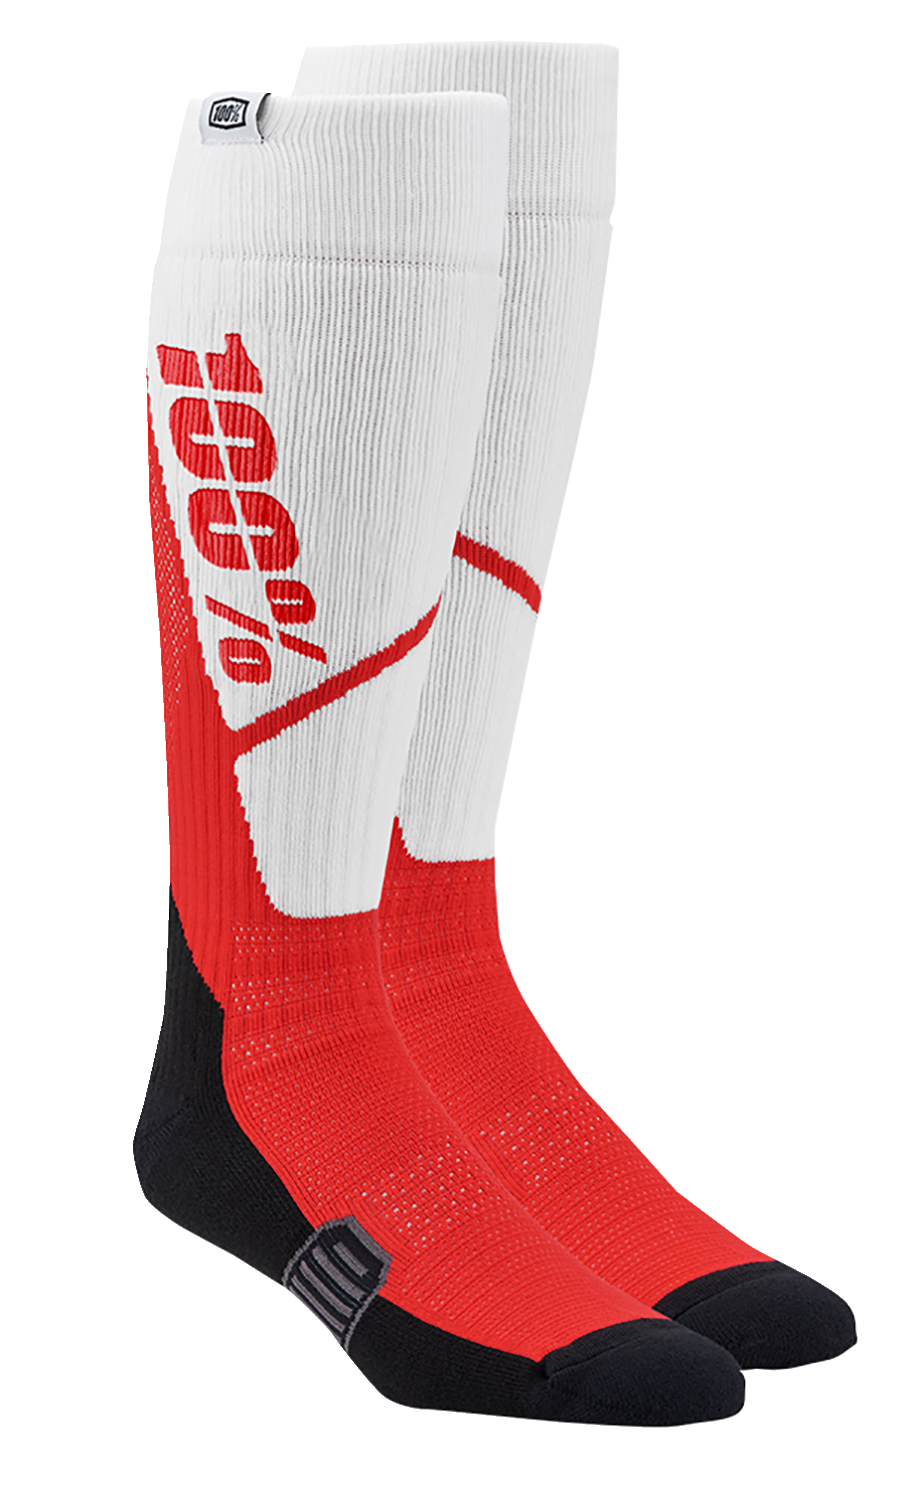 100% Torque Comfort Moto Socks - White/Red - Large/XL 20053-00010